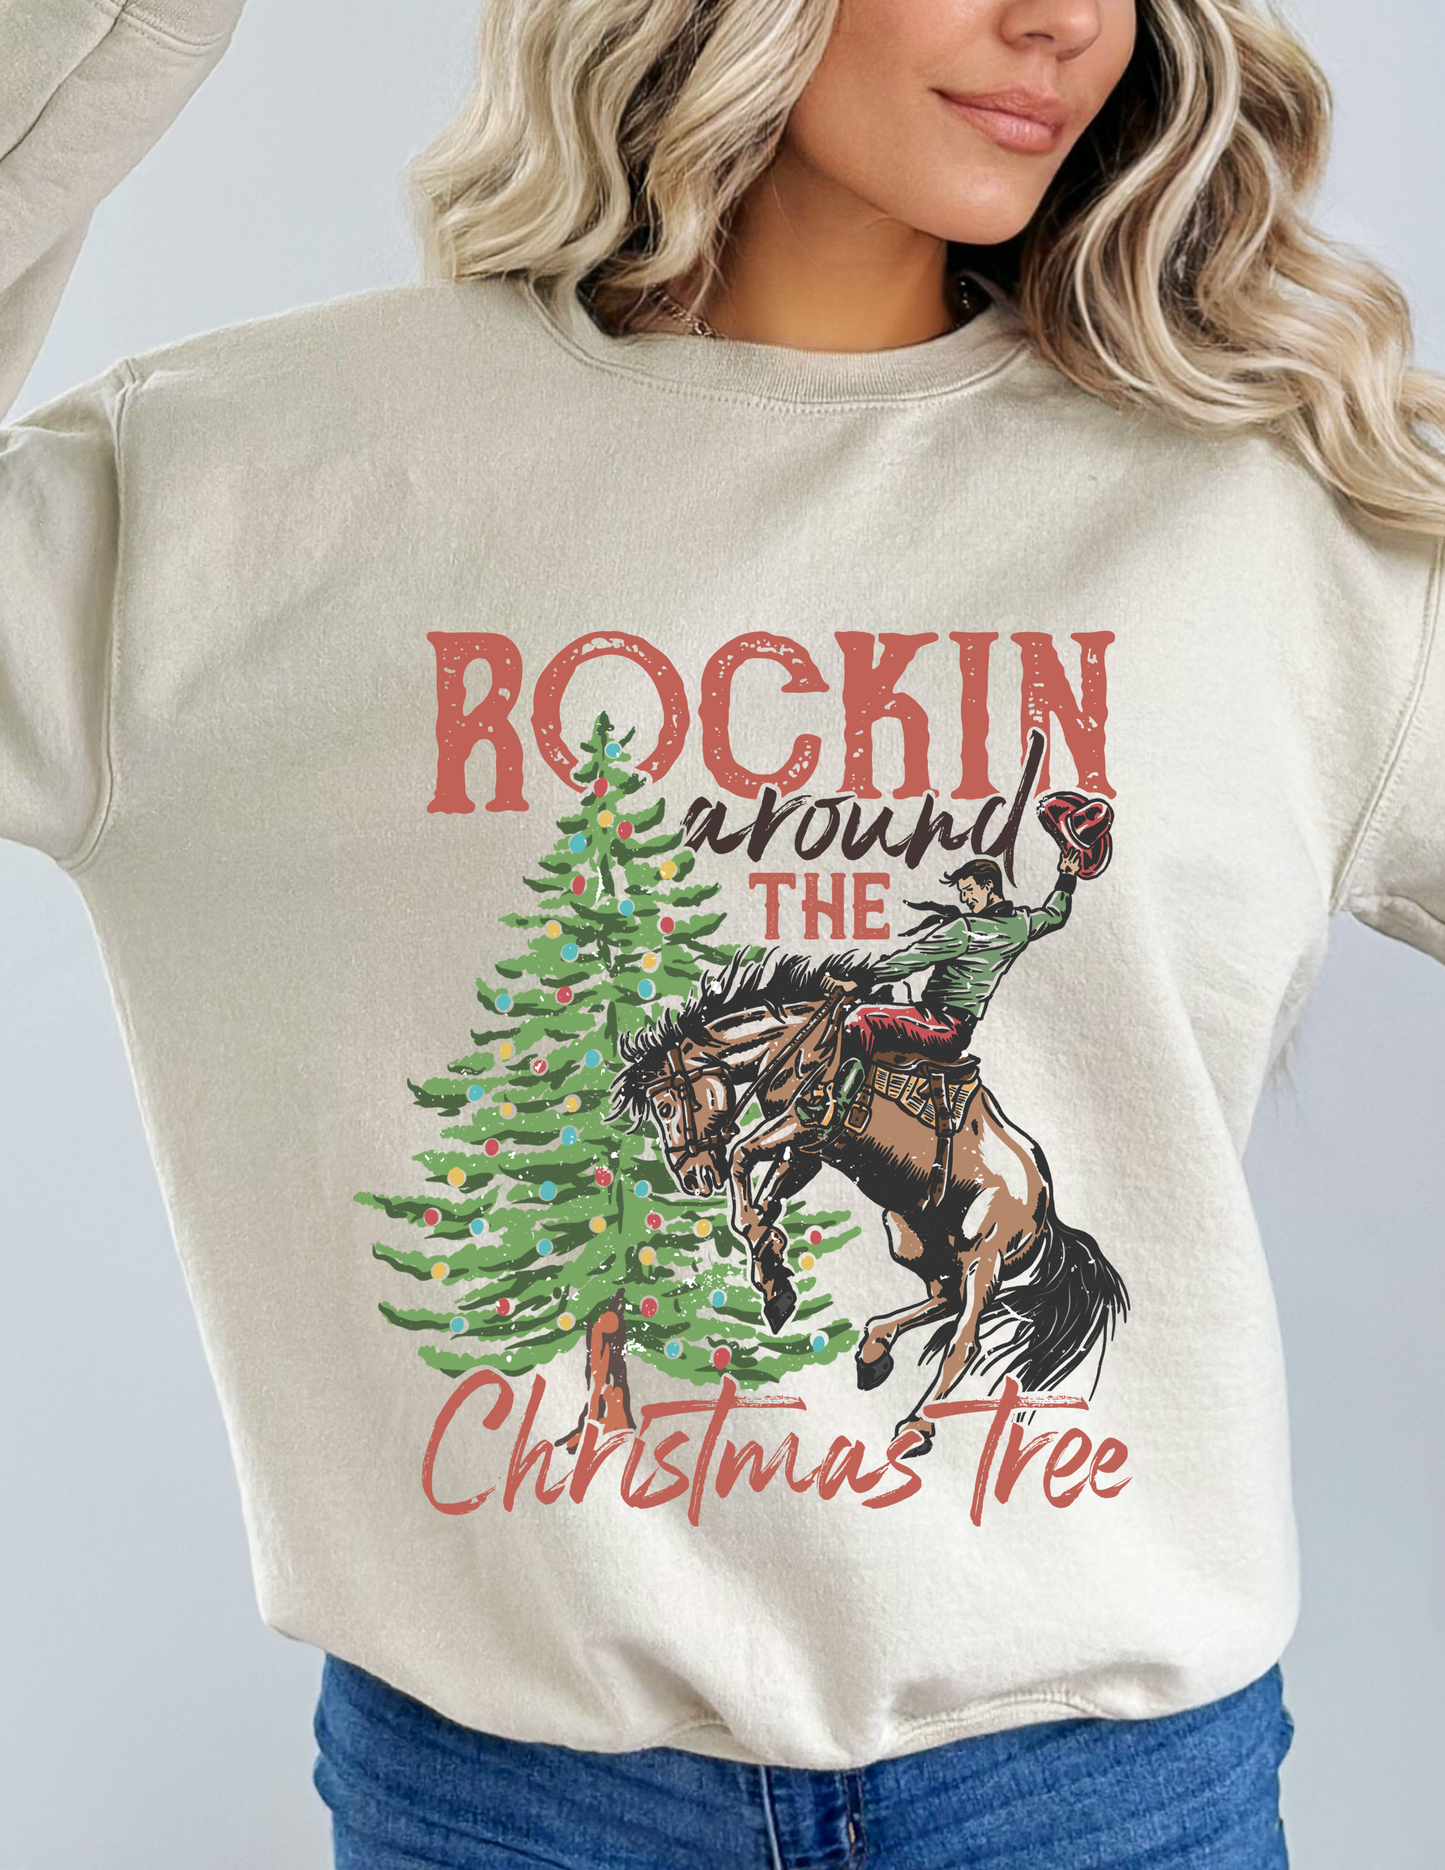 Rockin Around the Christmas Tree Sweatshirt - More Colors